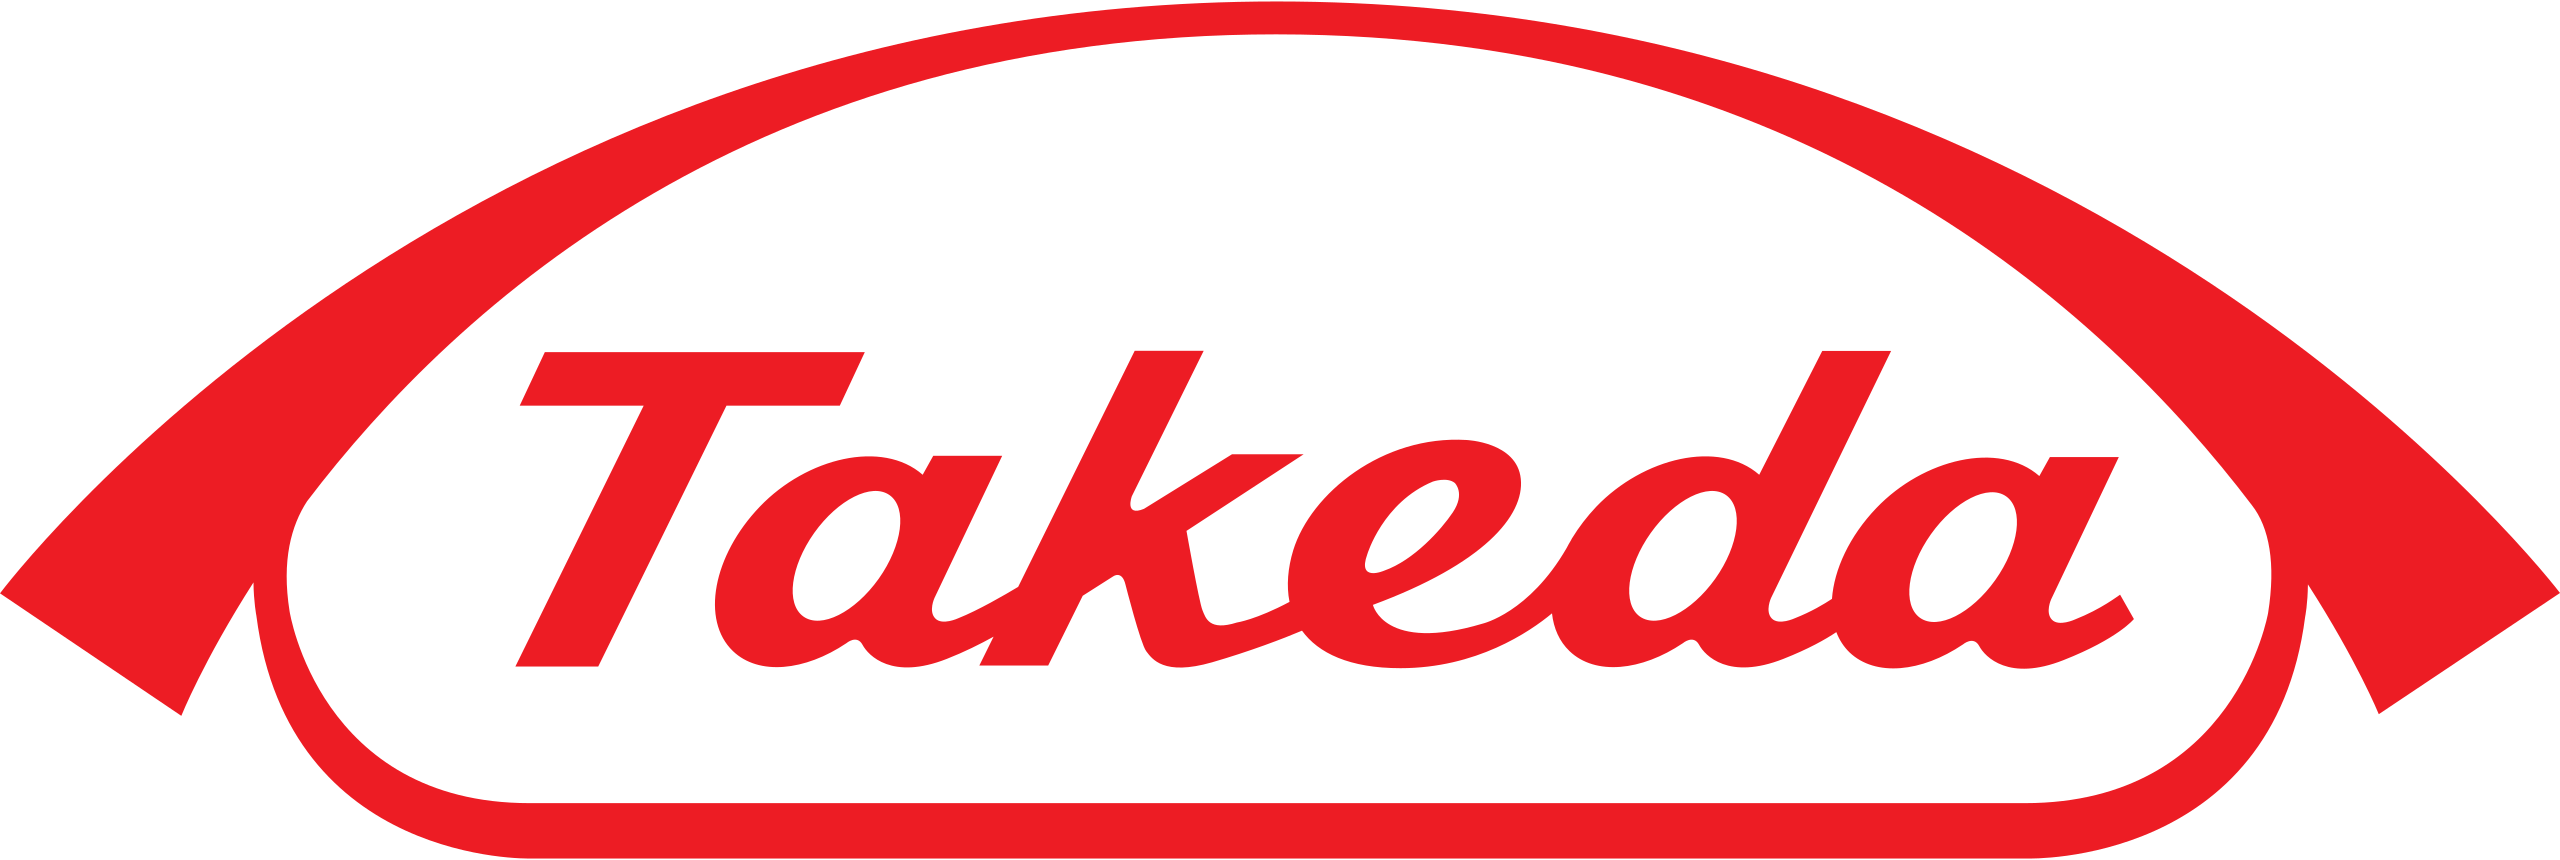 logo Takeda